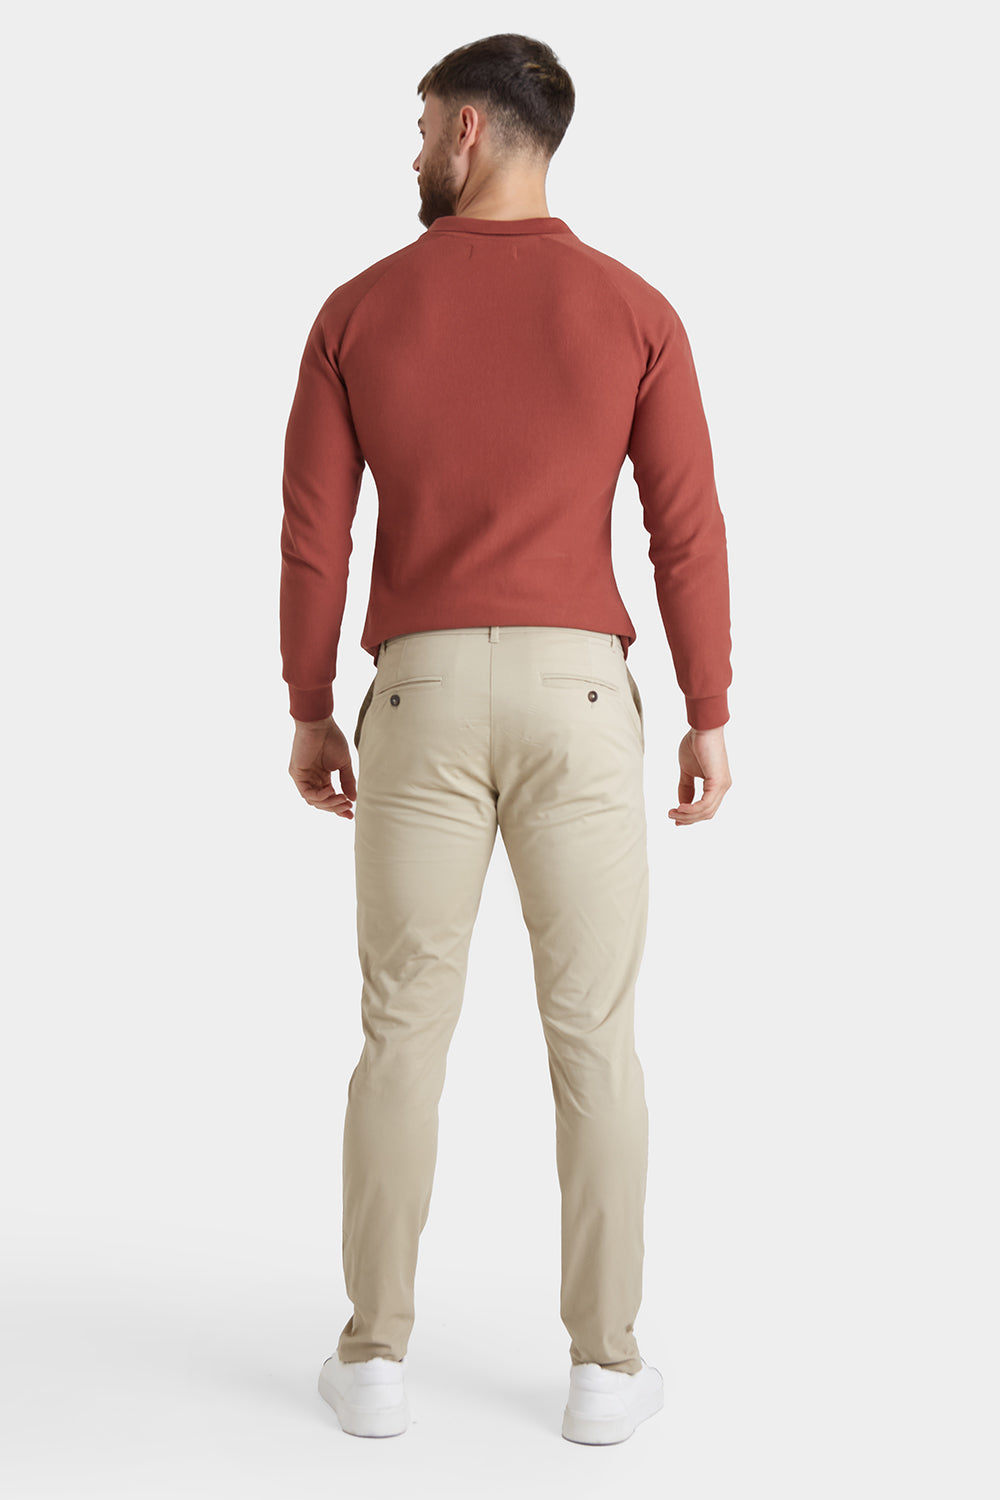 Tdoqot Chinos Pants Men- Drawstring Comftable Elastic Waist Slim Casual  Cotton Mens Pants Khaki - Walmart.com